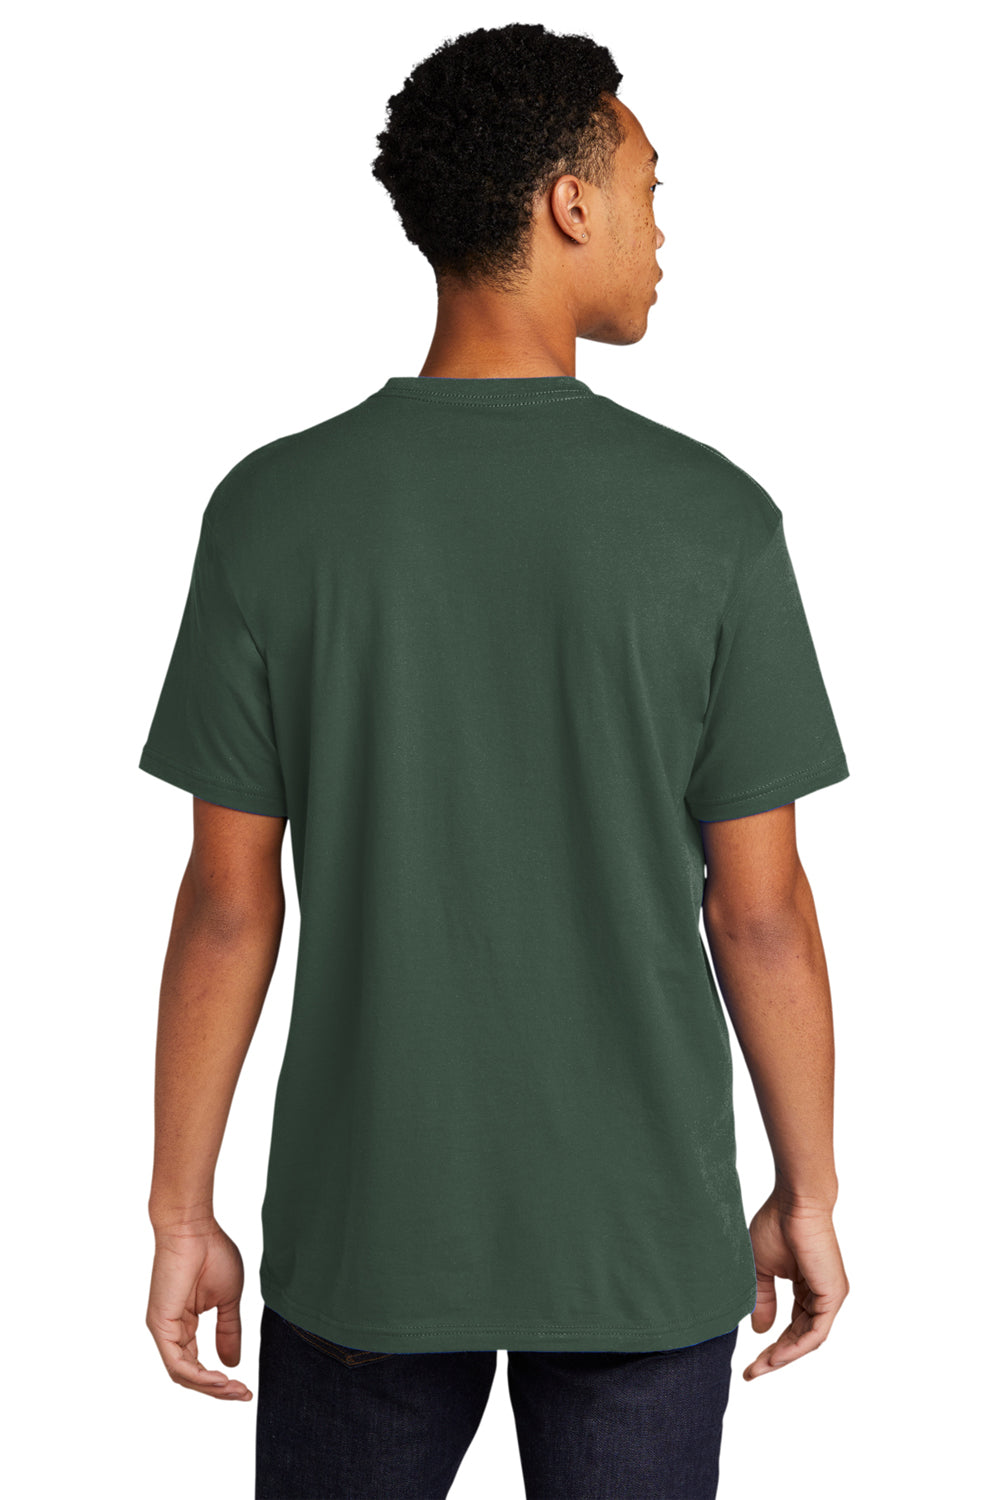 Next Level NL3600/3600 Mens Fine Jersey Short Sleeve Crewneck T-Shirt Royal Pine Green Back